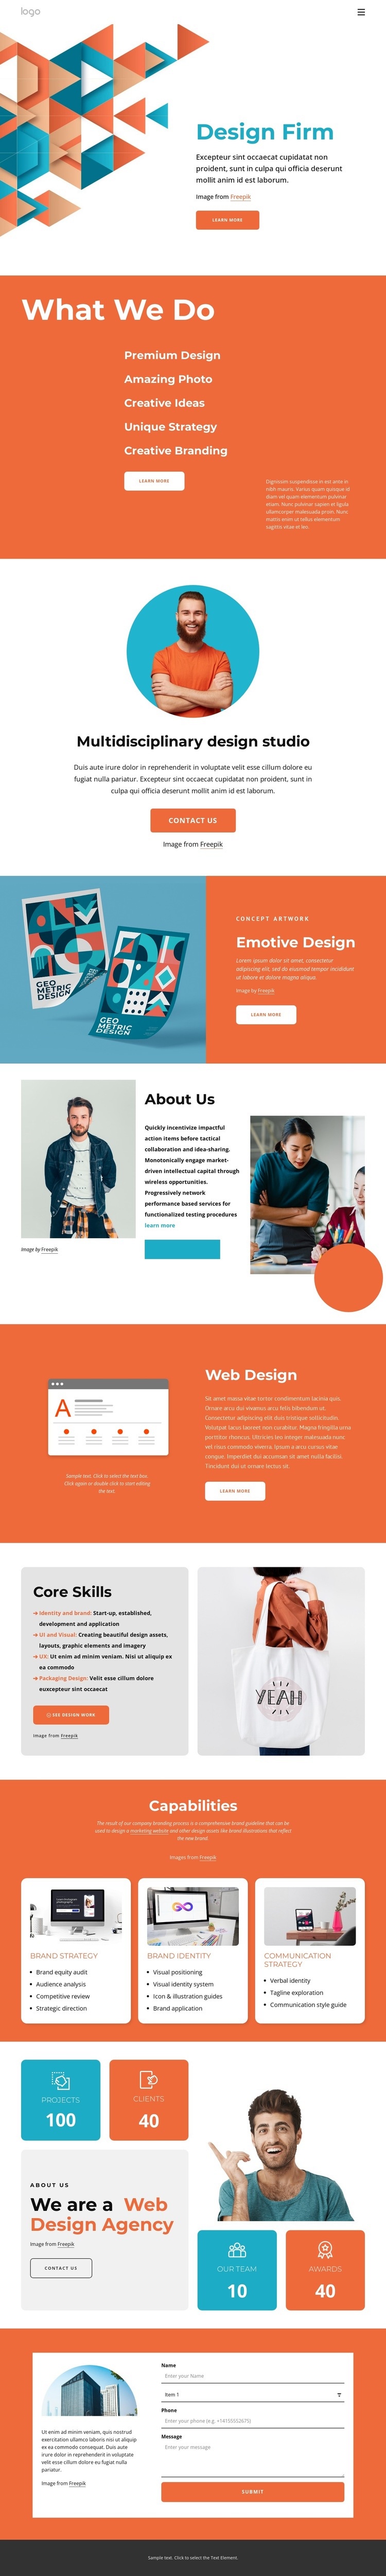 Creative ideas and great design Webflow Template Alternative